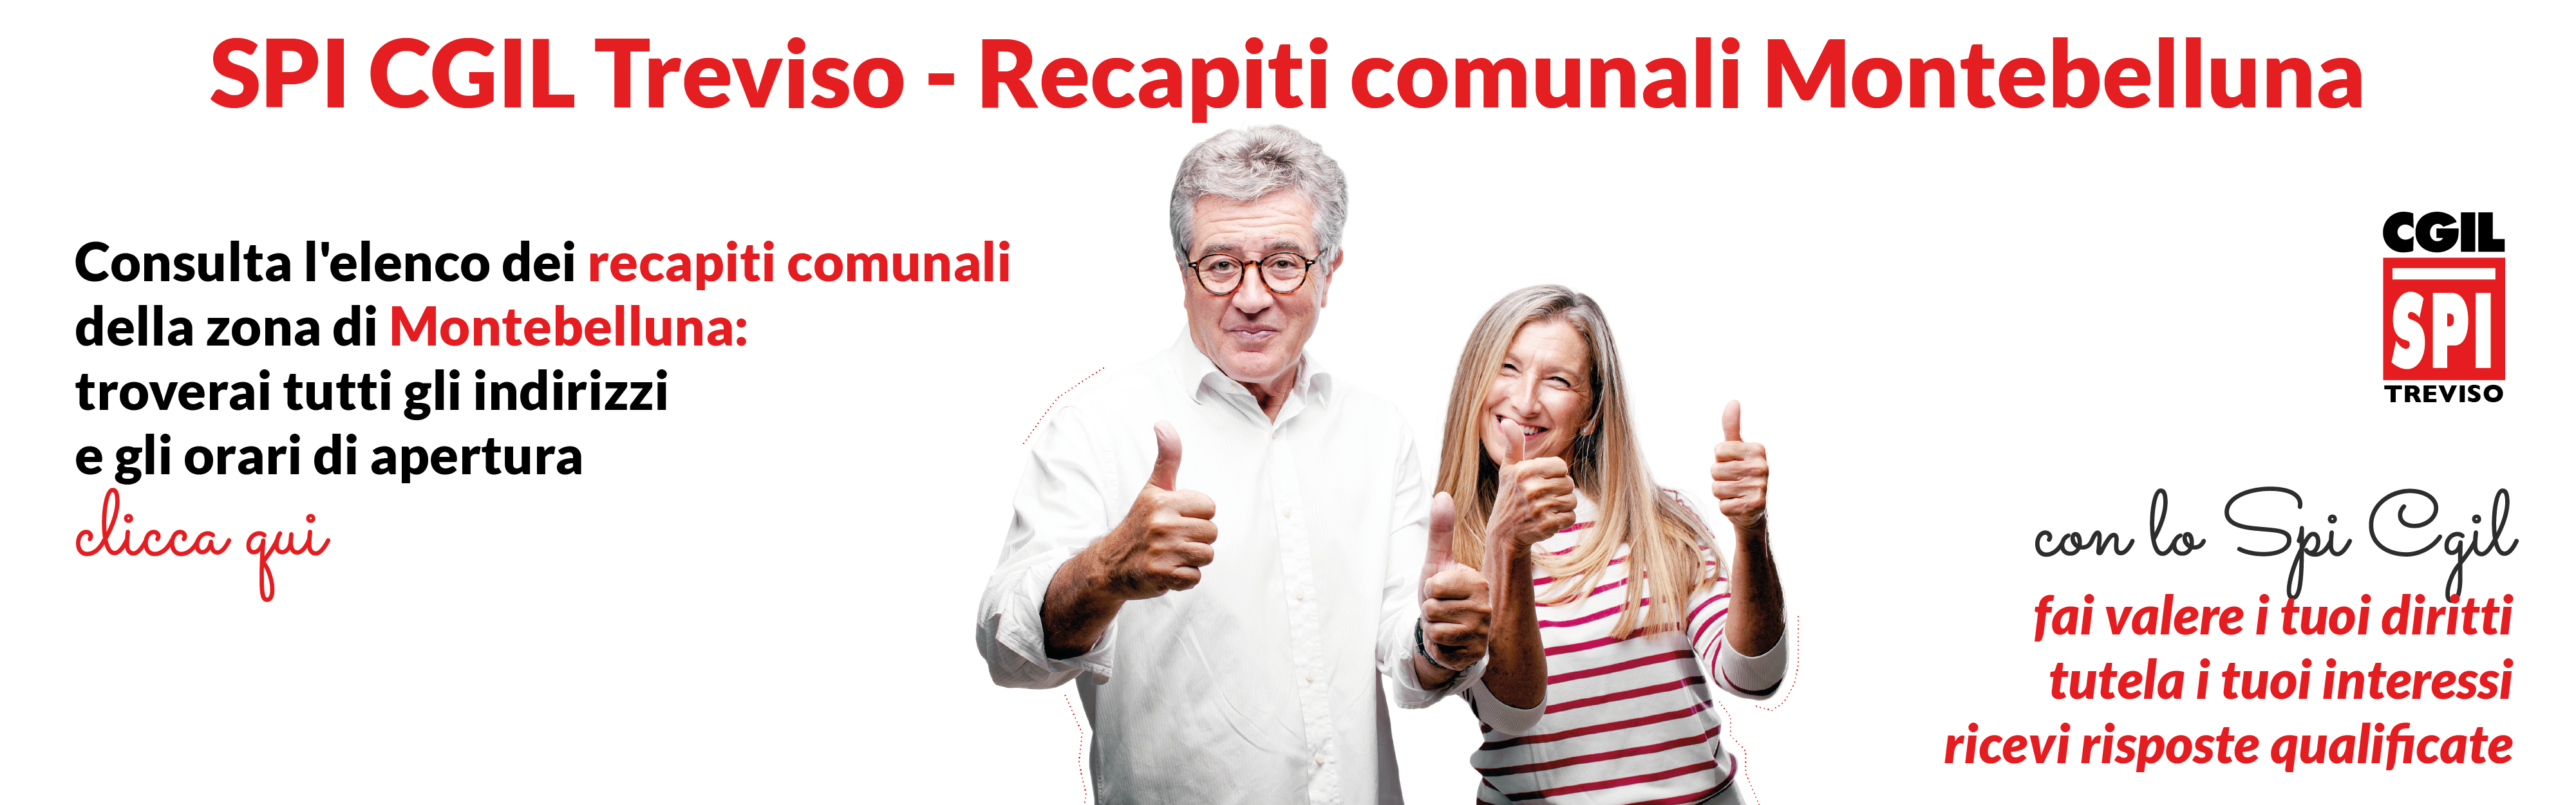 SPI CGIL TV-Recapiti Montebelluna-banner